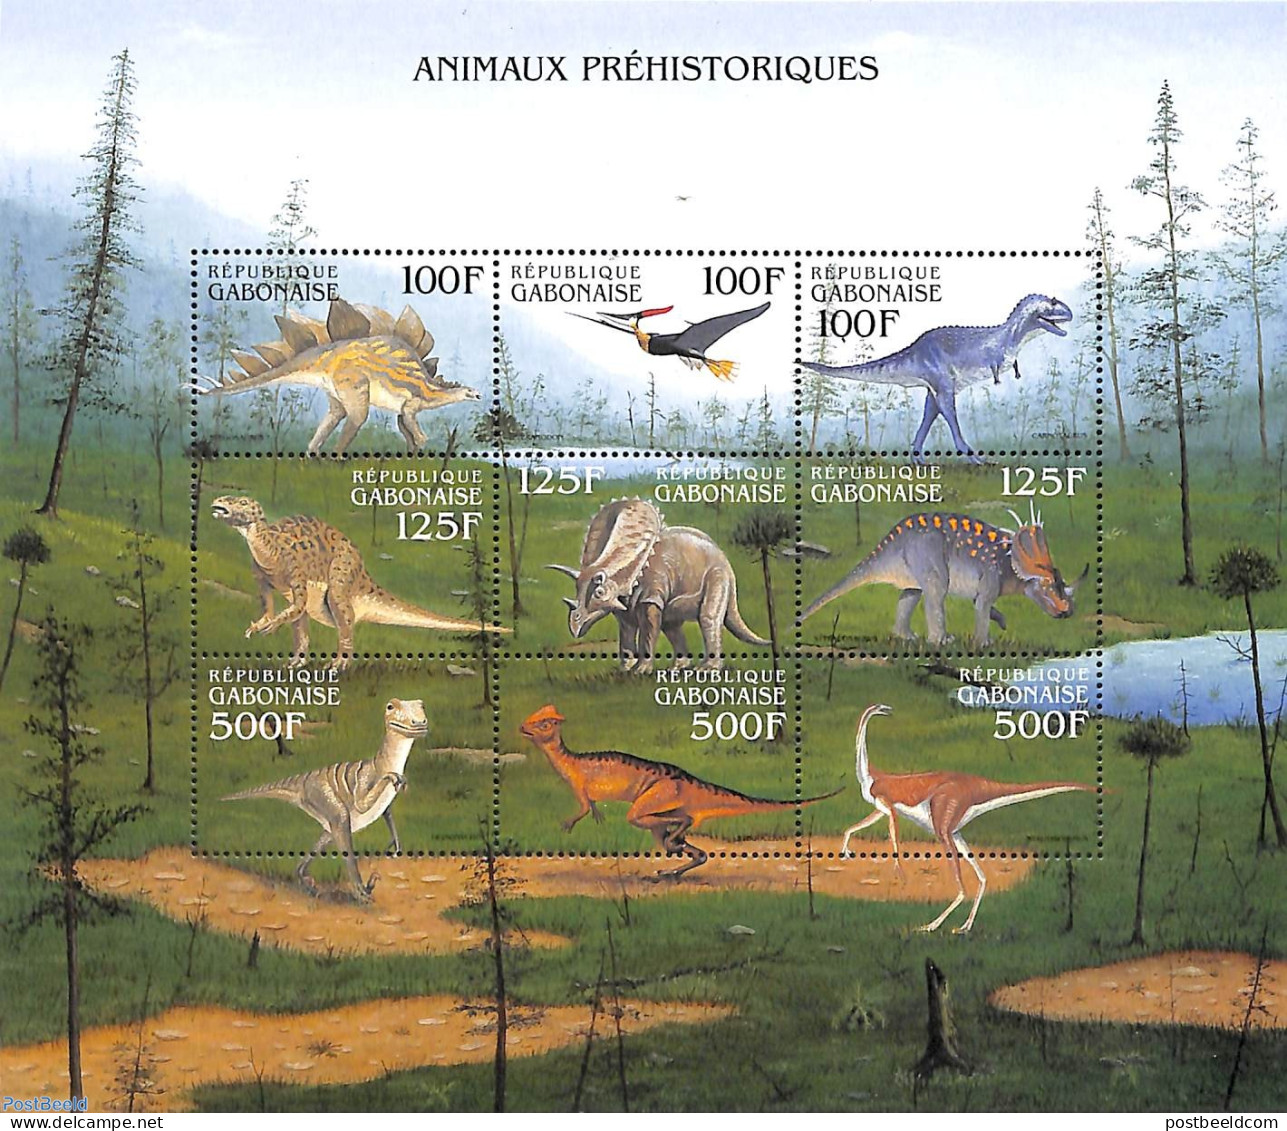 Gabon 2000 Preh. Animals 9v M/s, Stegosaurus, Mint NH, Nature - Prehistoric Animals - Unused Stamps